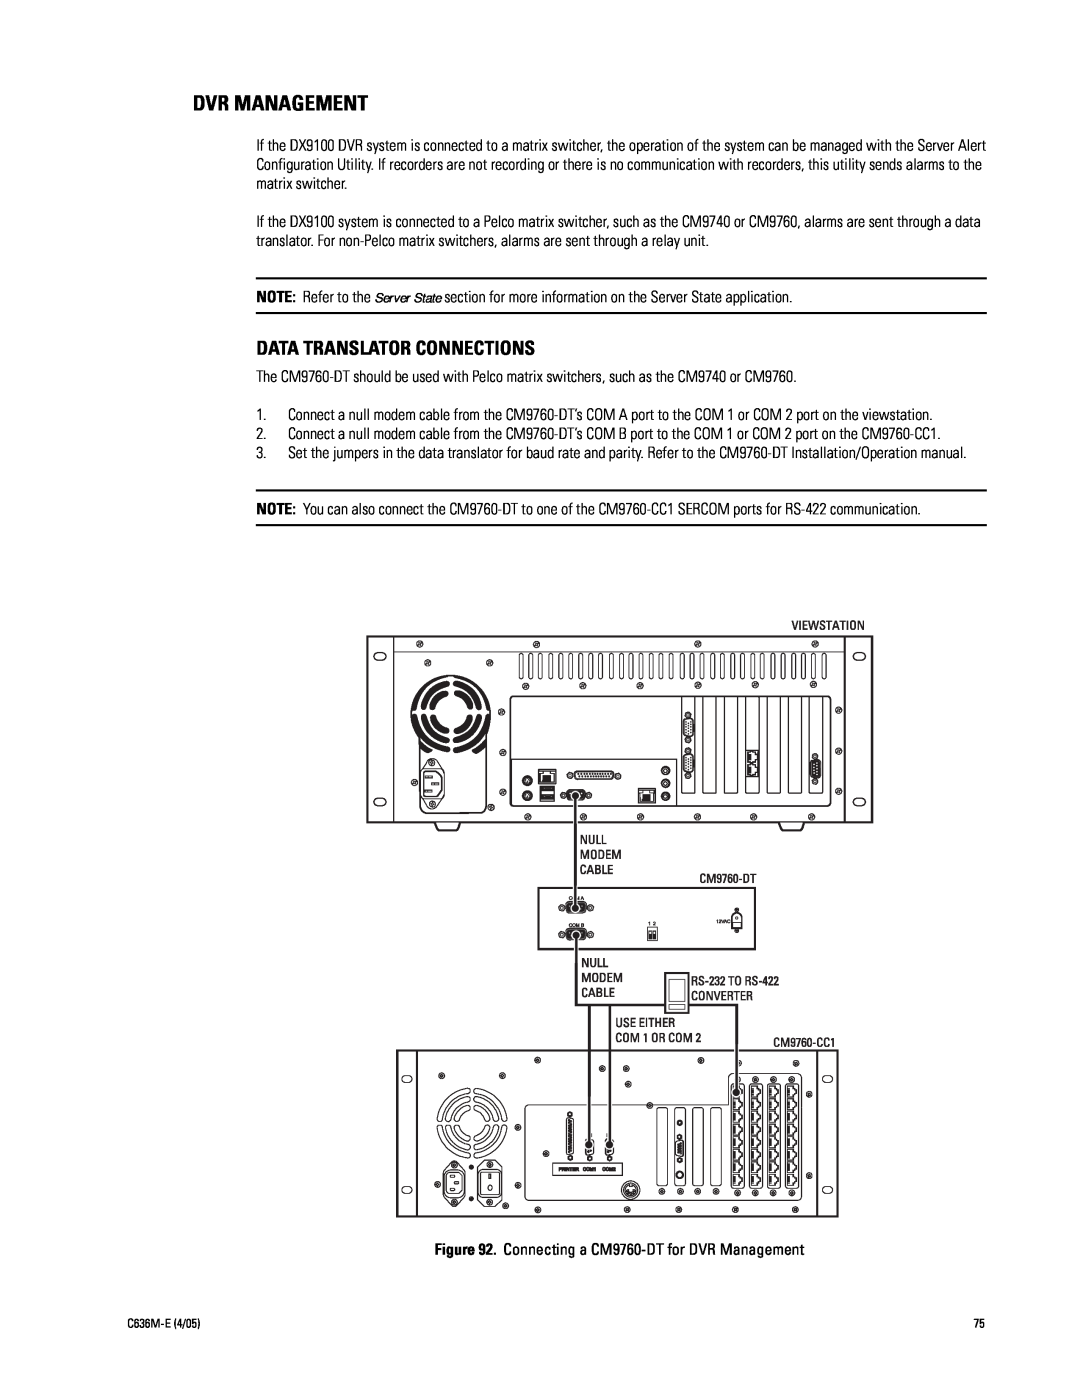 Pelco DX9100 installation manual Dvr Management, Data Translator Connections 